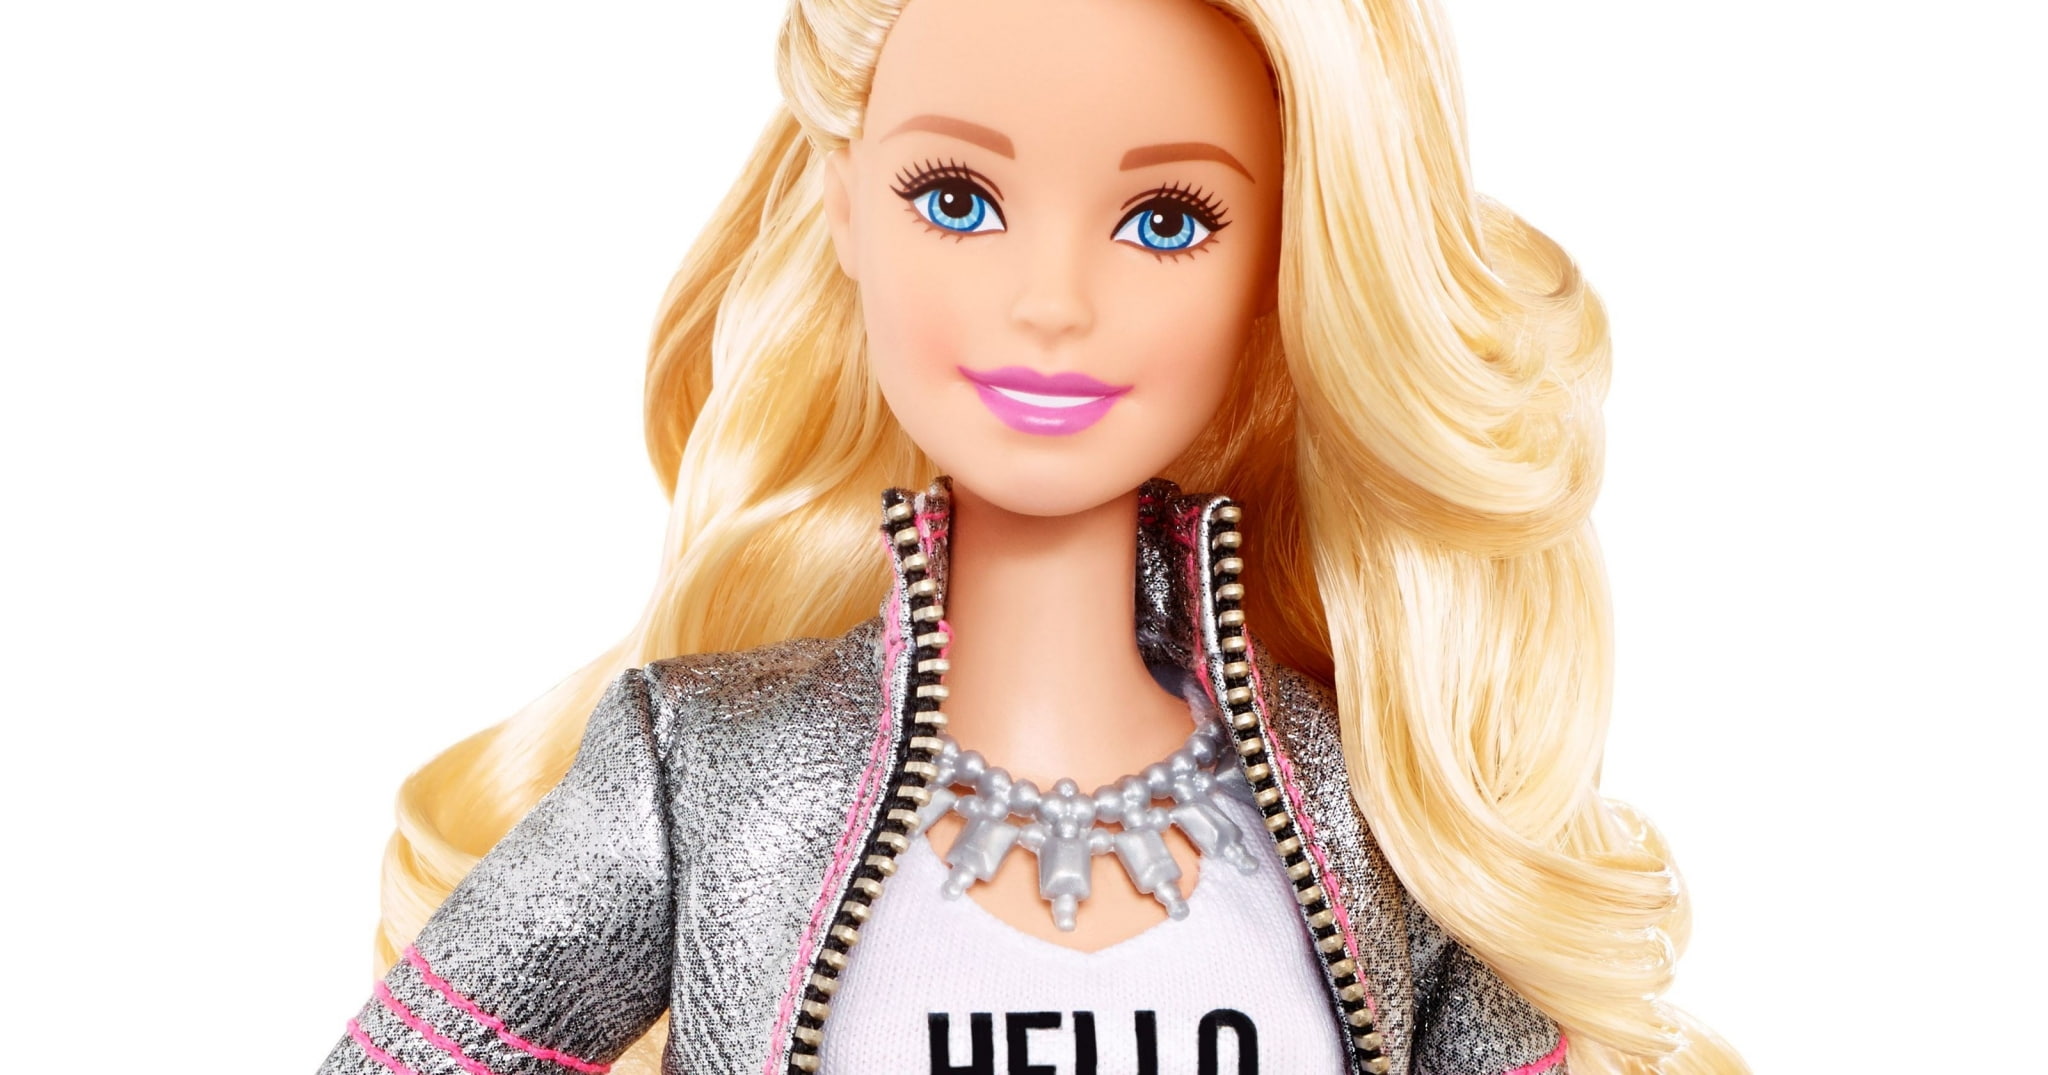 barbie pc backgrounds hd, blond hair, beauty, beautiful woman